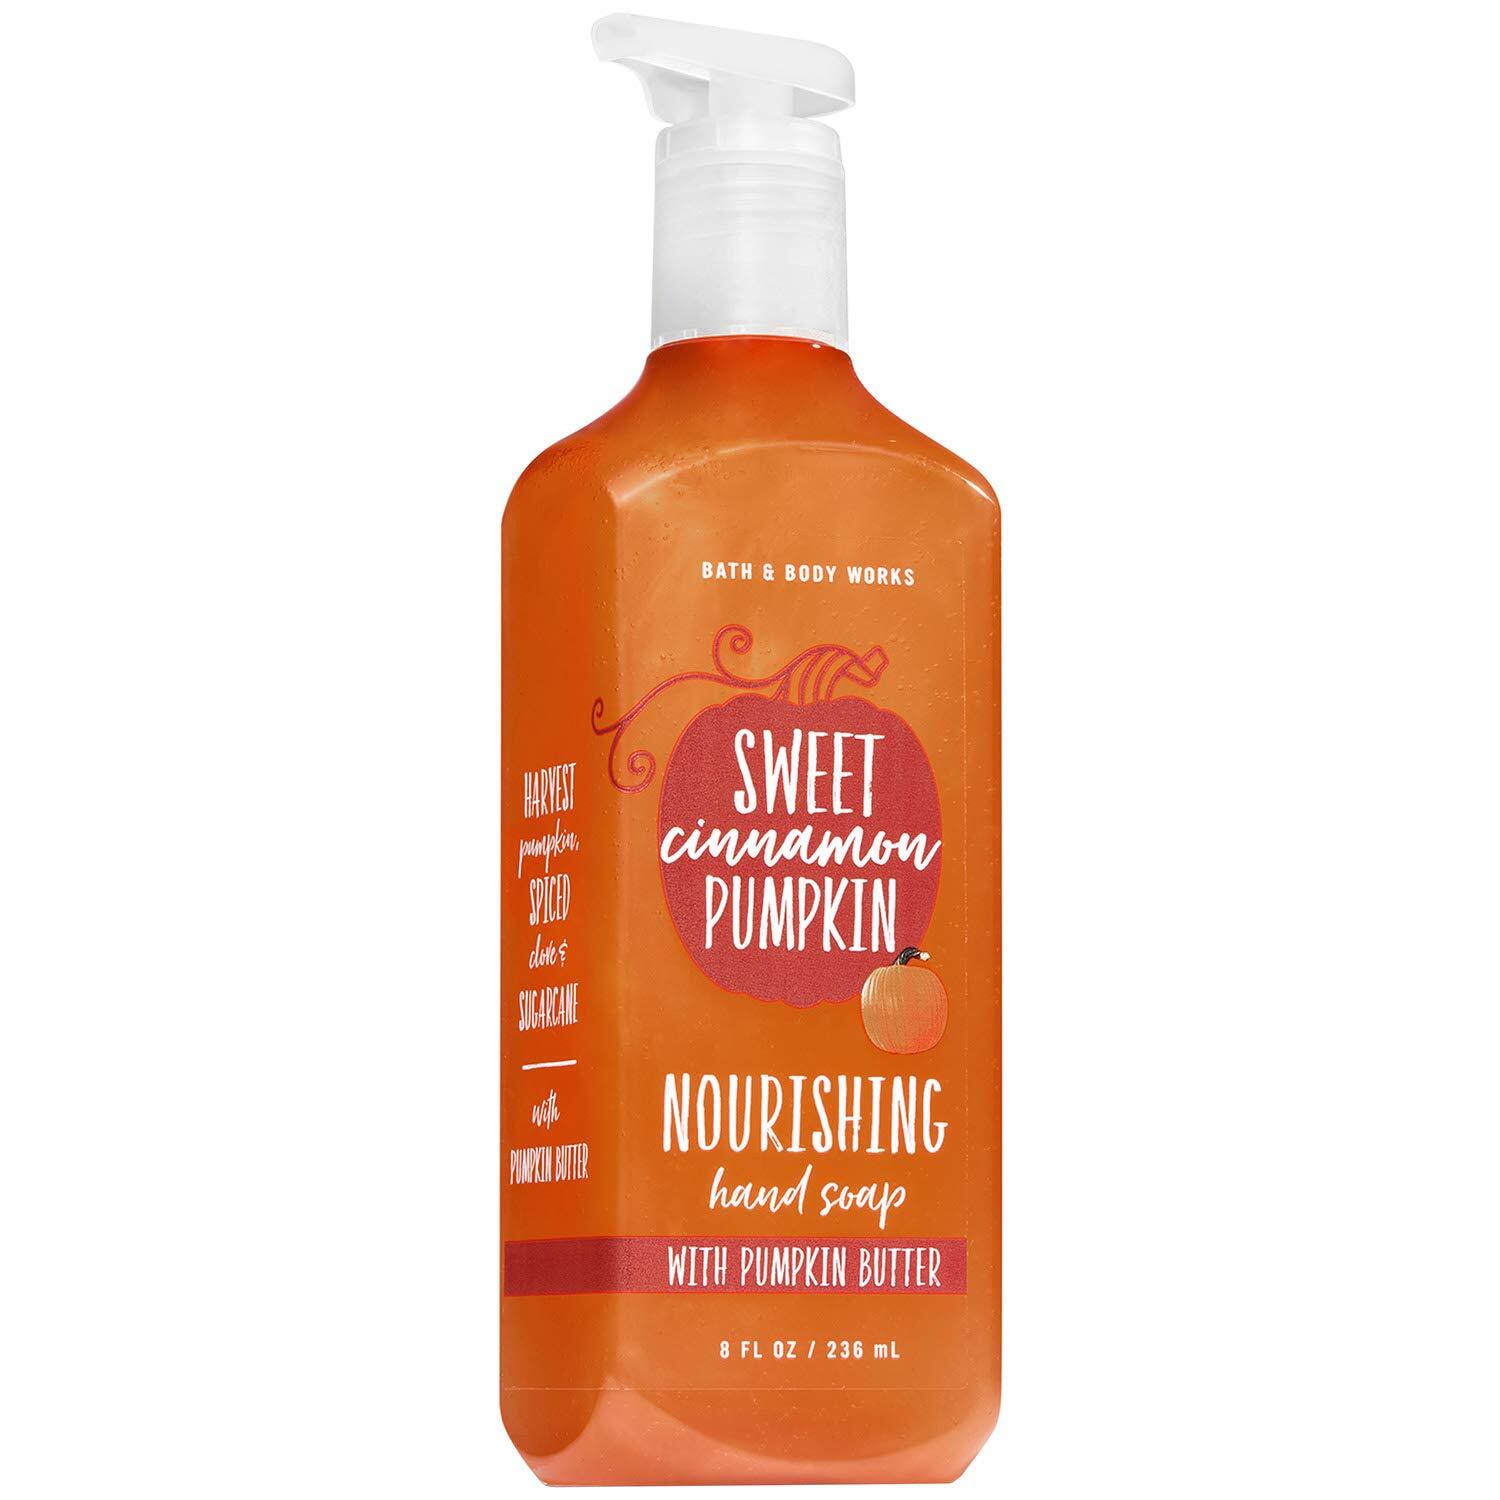 Bath and Body Works SWEET CINNAMON PUMPKIN Hand Soap with Pumpkin Butter 8 Fluid Ounce (2018 Fall Edition)